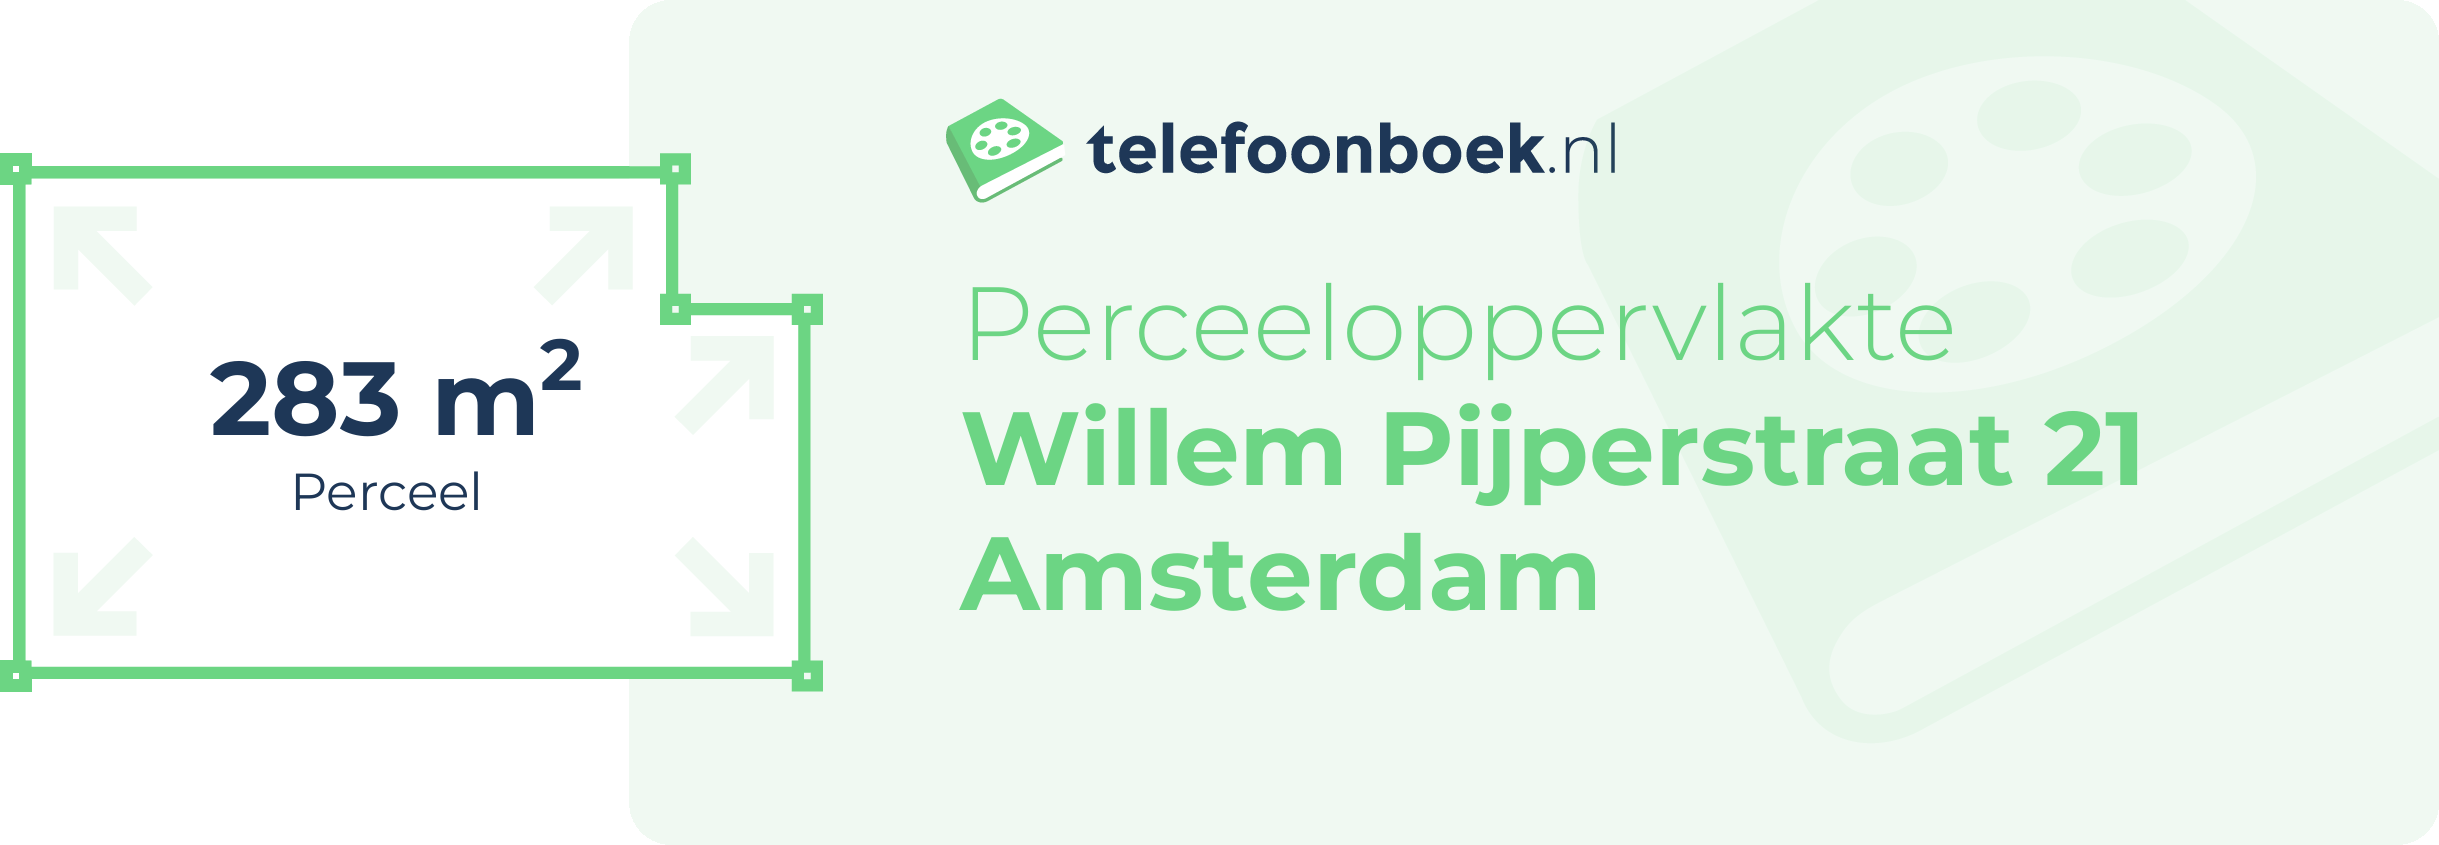 Perceeloppervlakte Willem Pijperstraat 21 Amsterdam